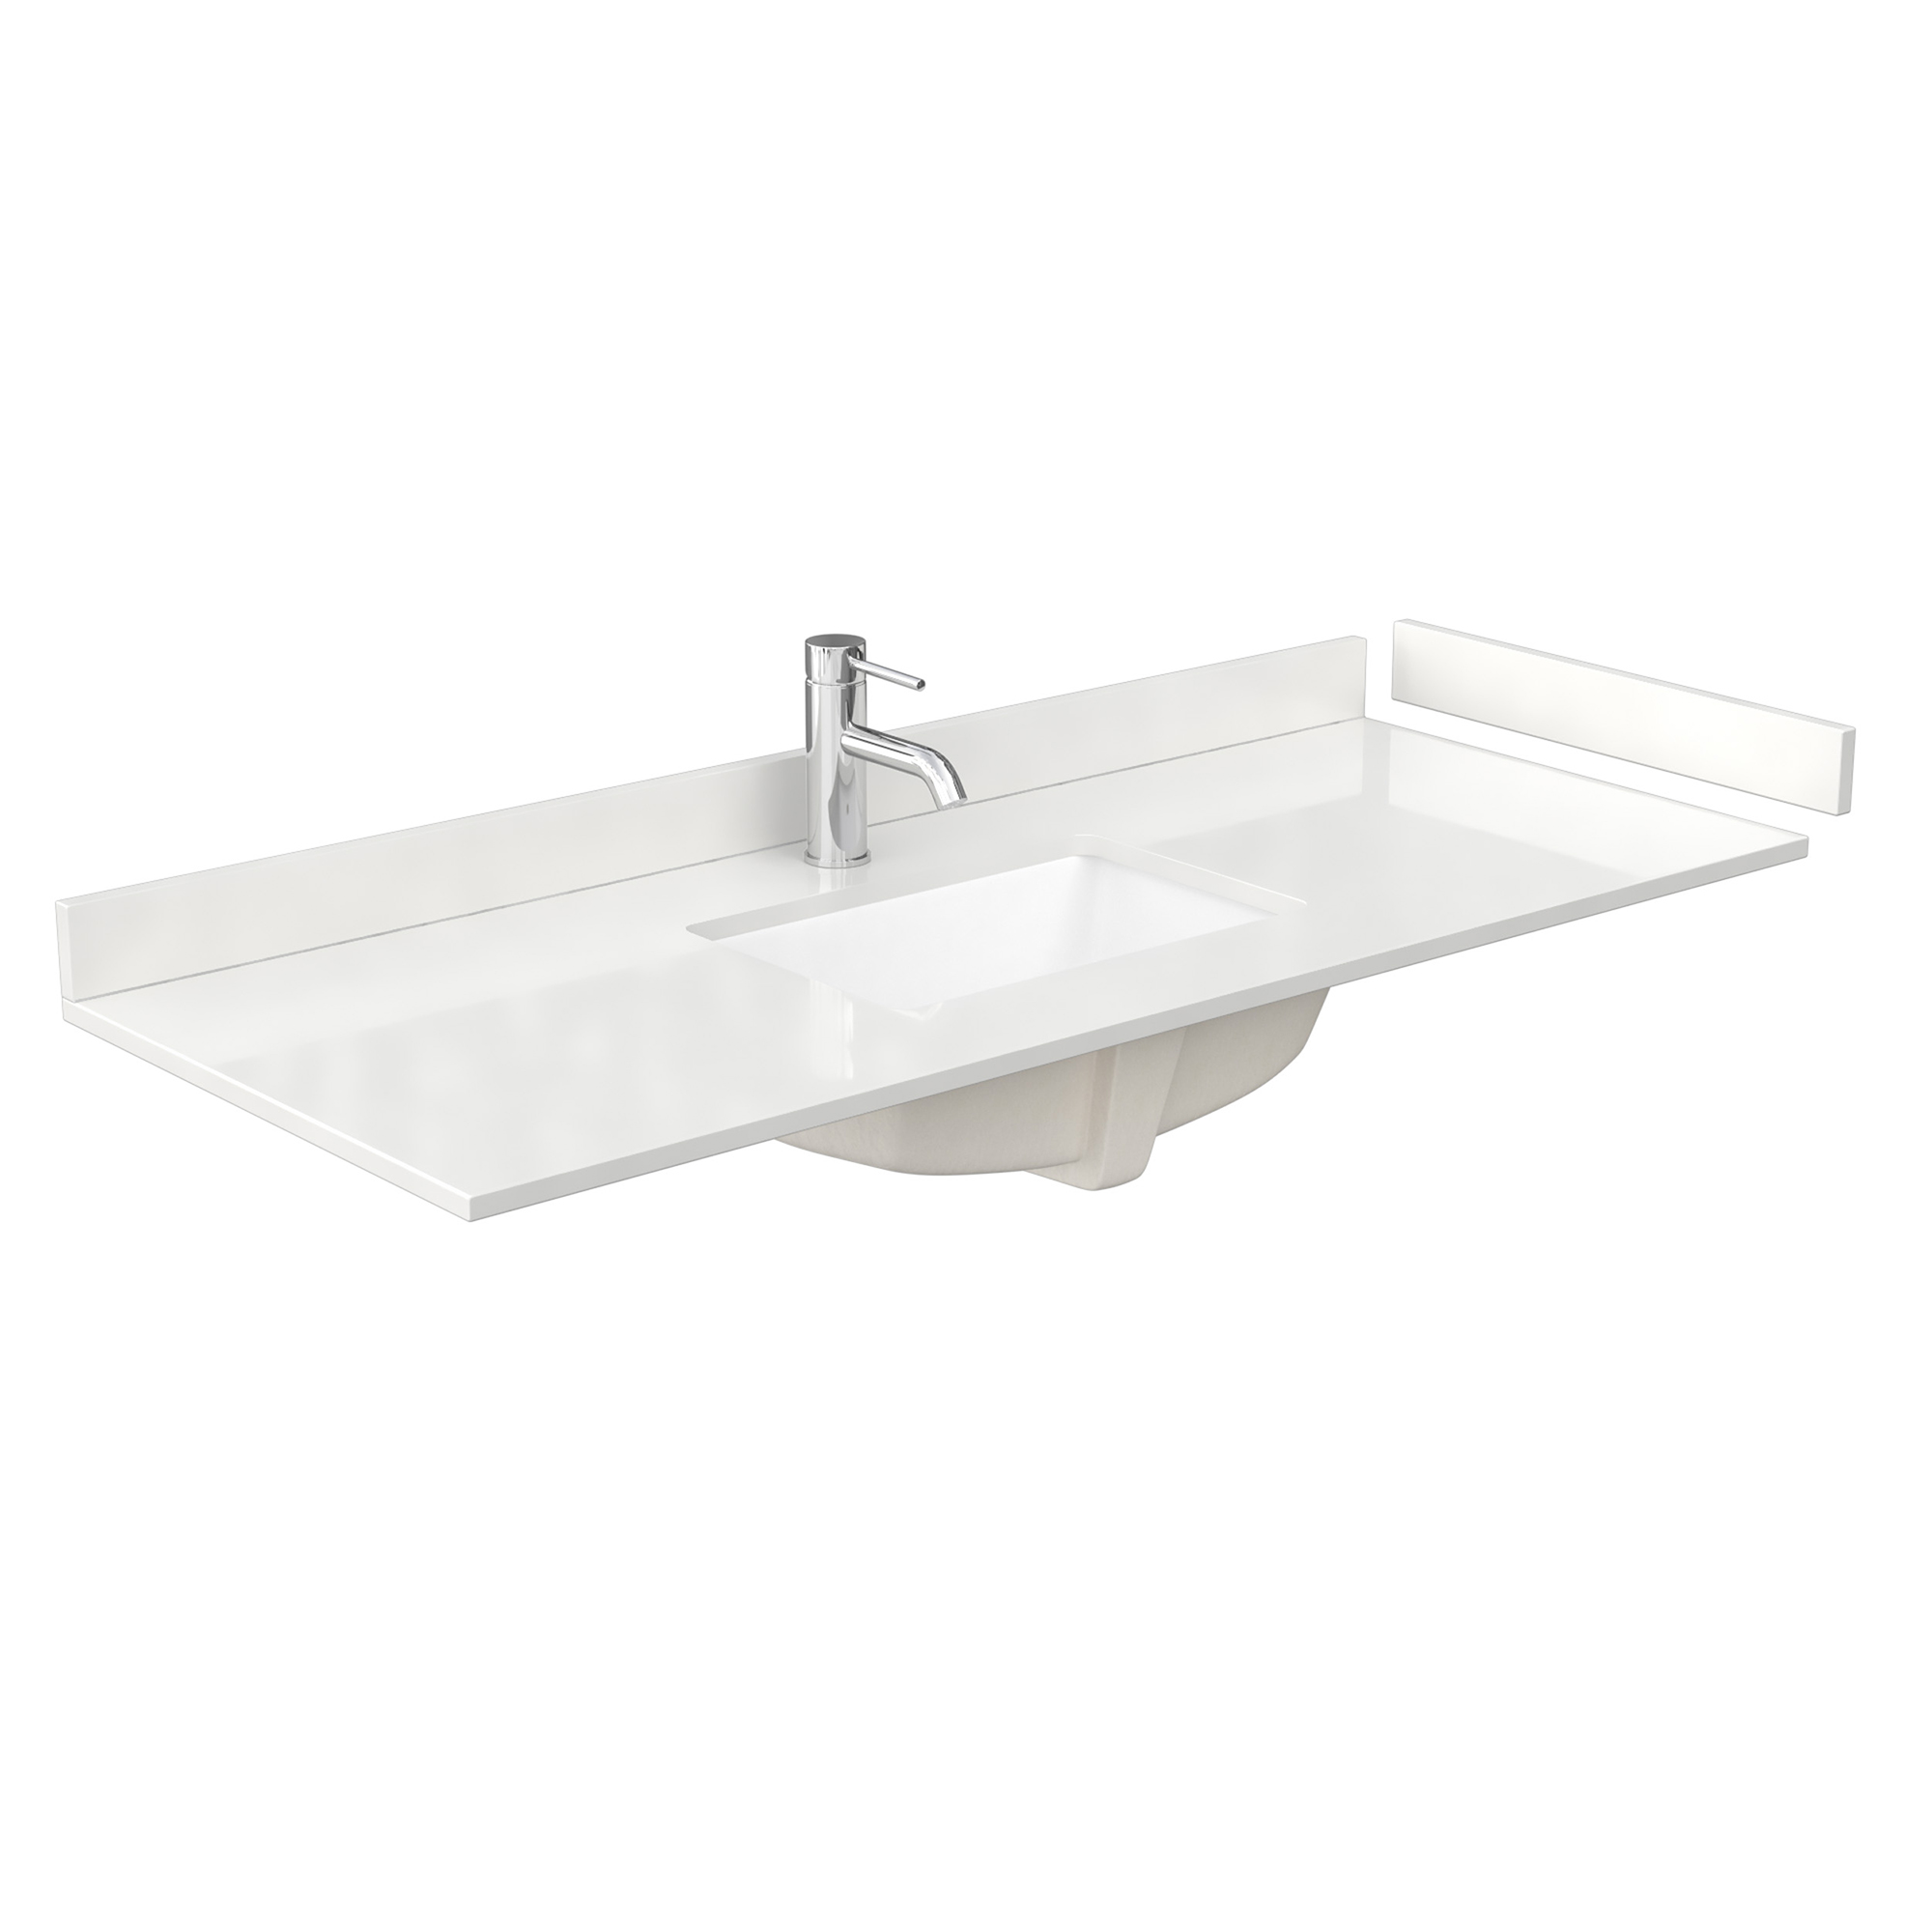 54" Single Countertop - White Quartz (1000) with Undermount Square Sink (1-Hole) - Includes Backsplash and Sidesplash WCFQC154STOPUNSWQ